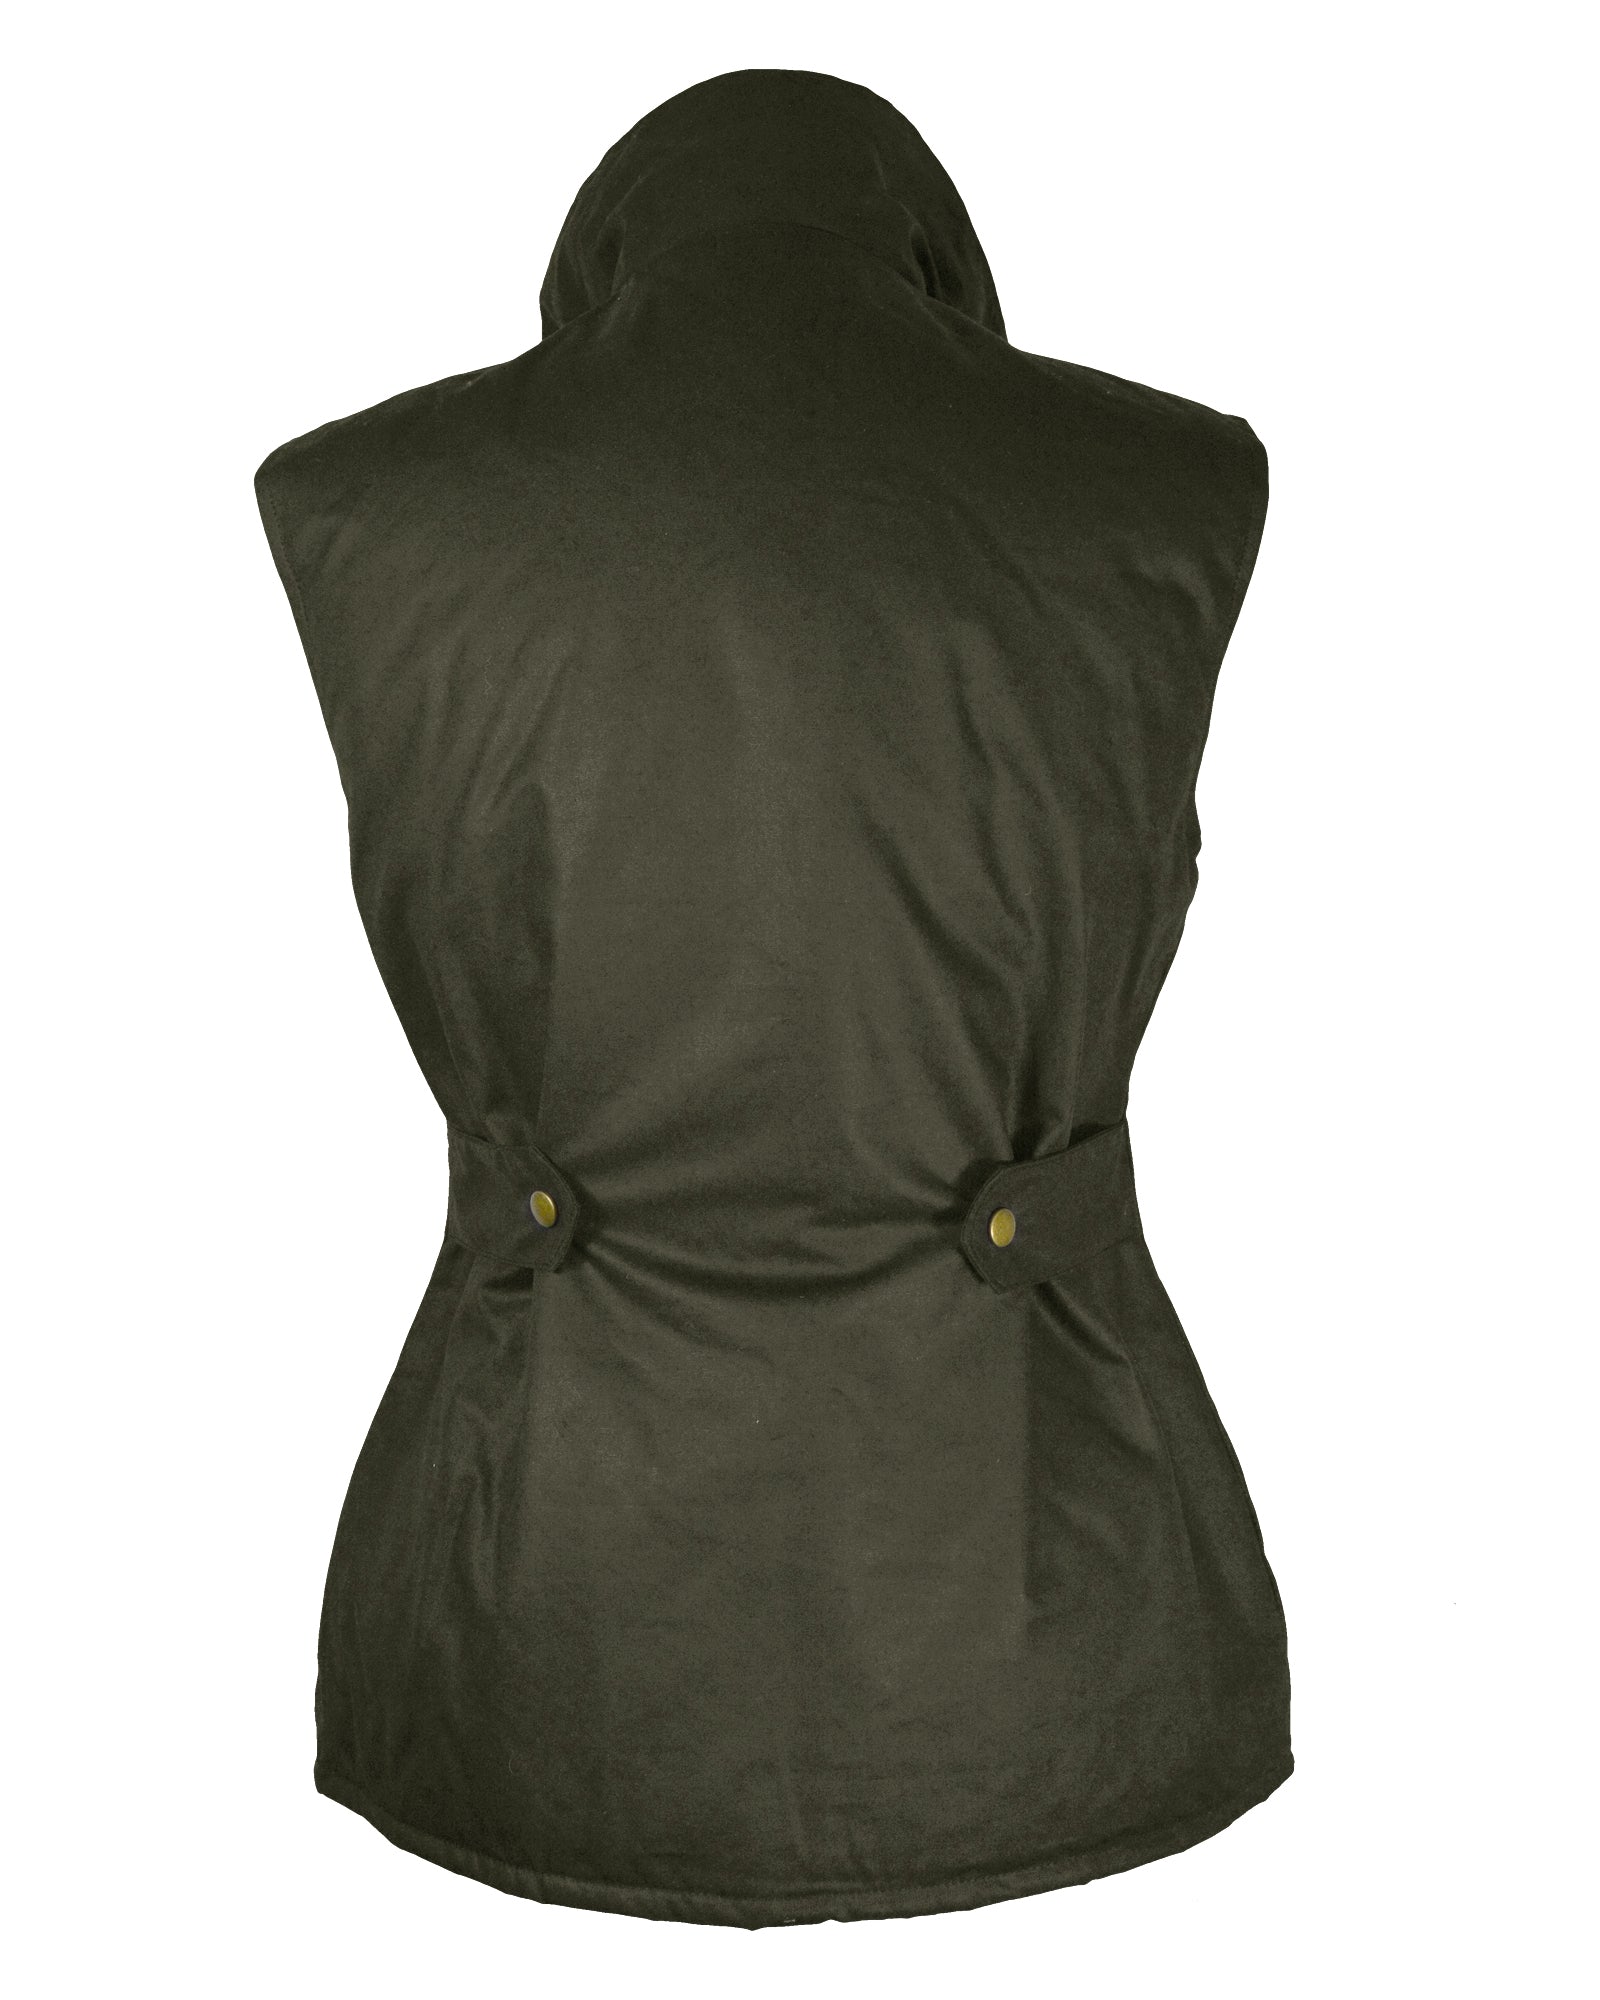 Regents View Womens Fitted Wax Waistcoat Body Warmer - Olive Green